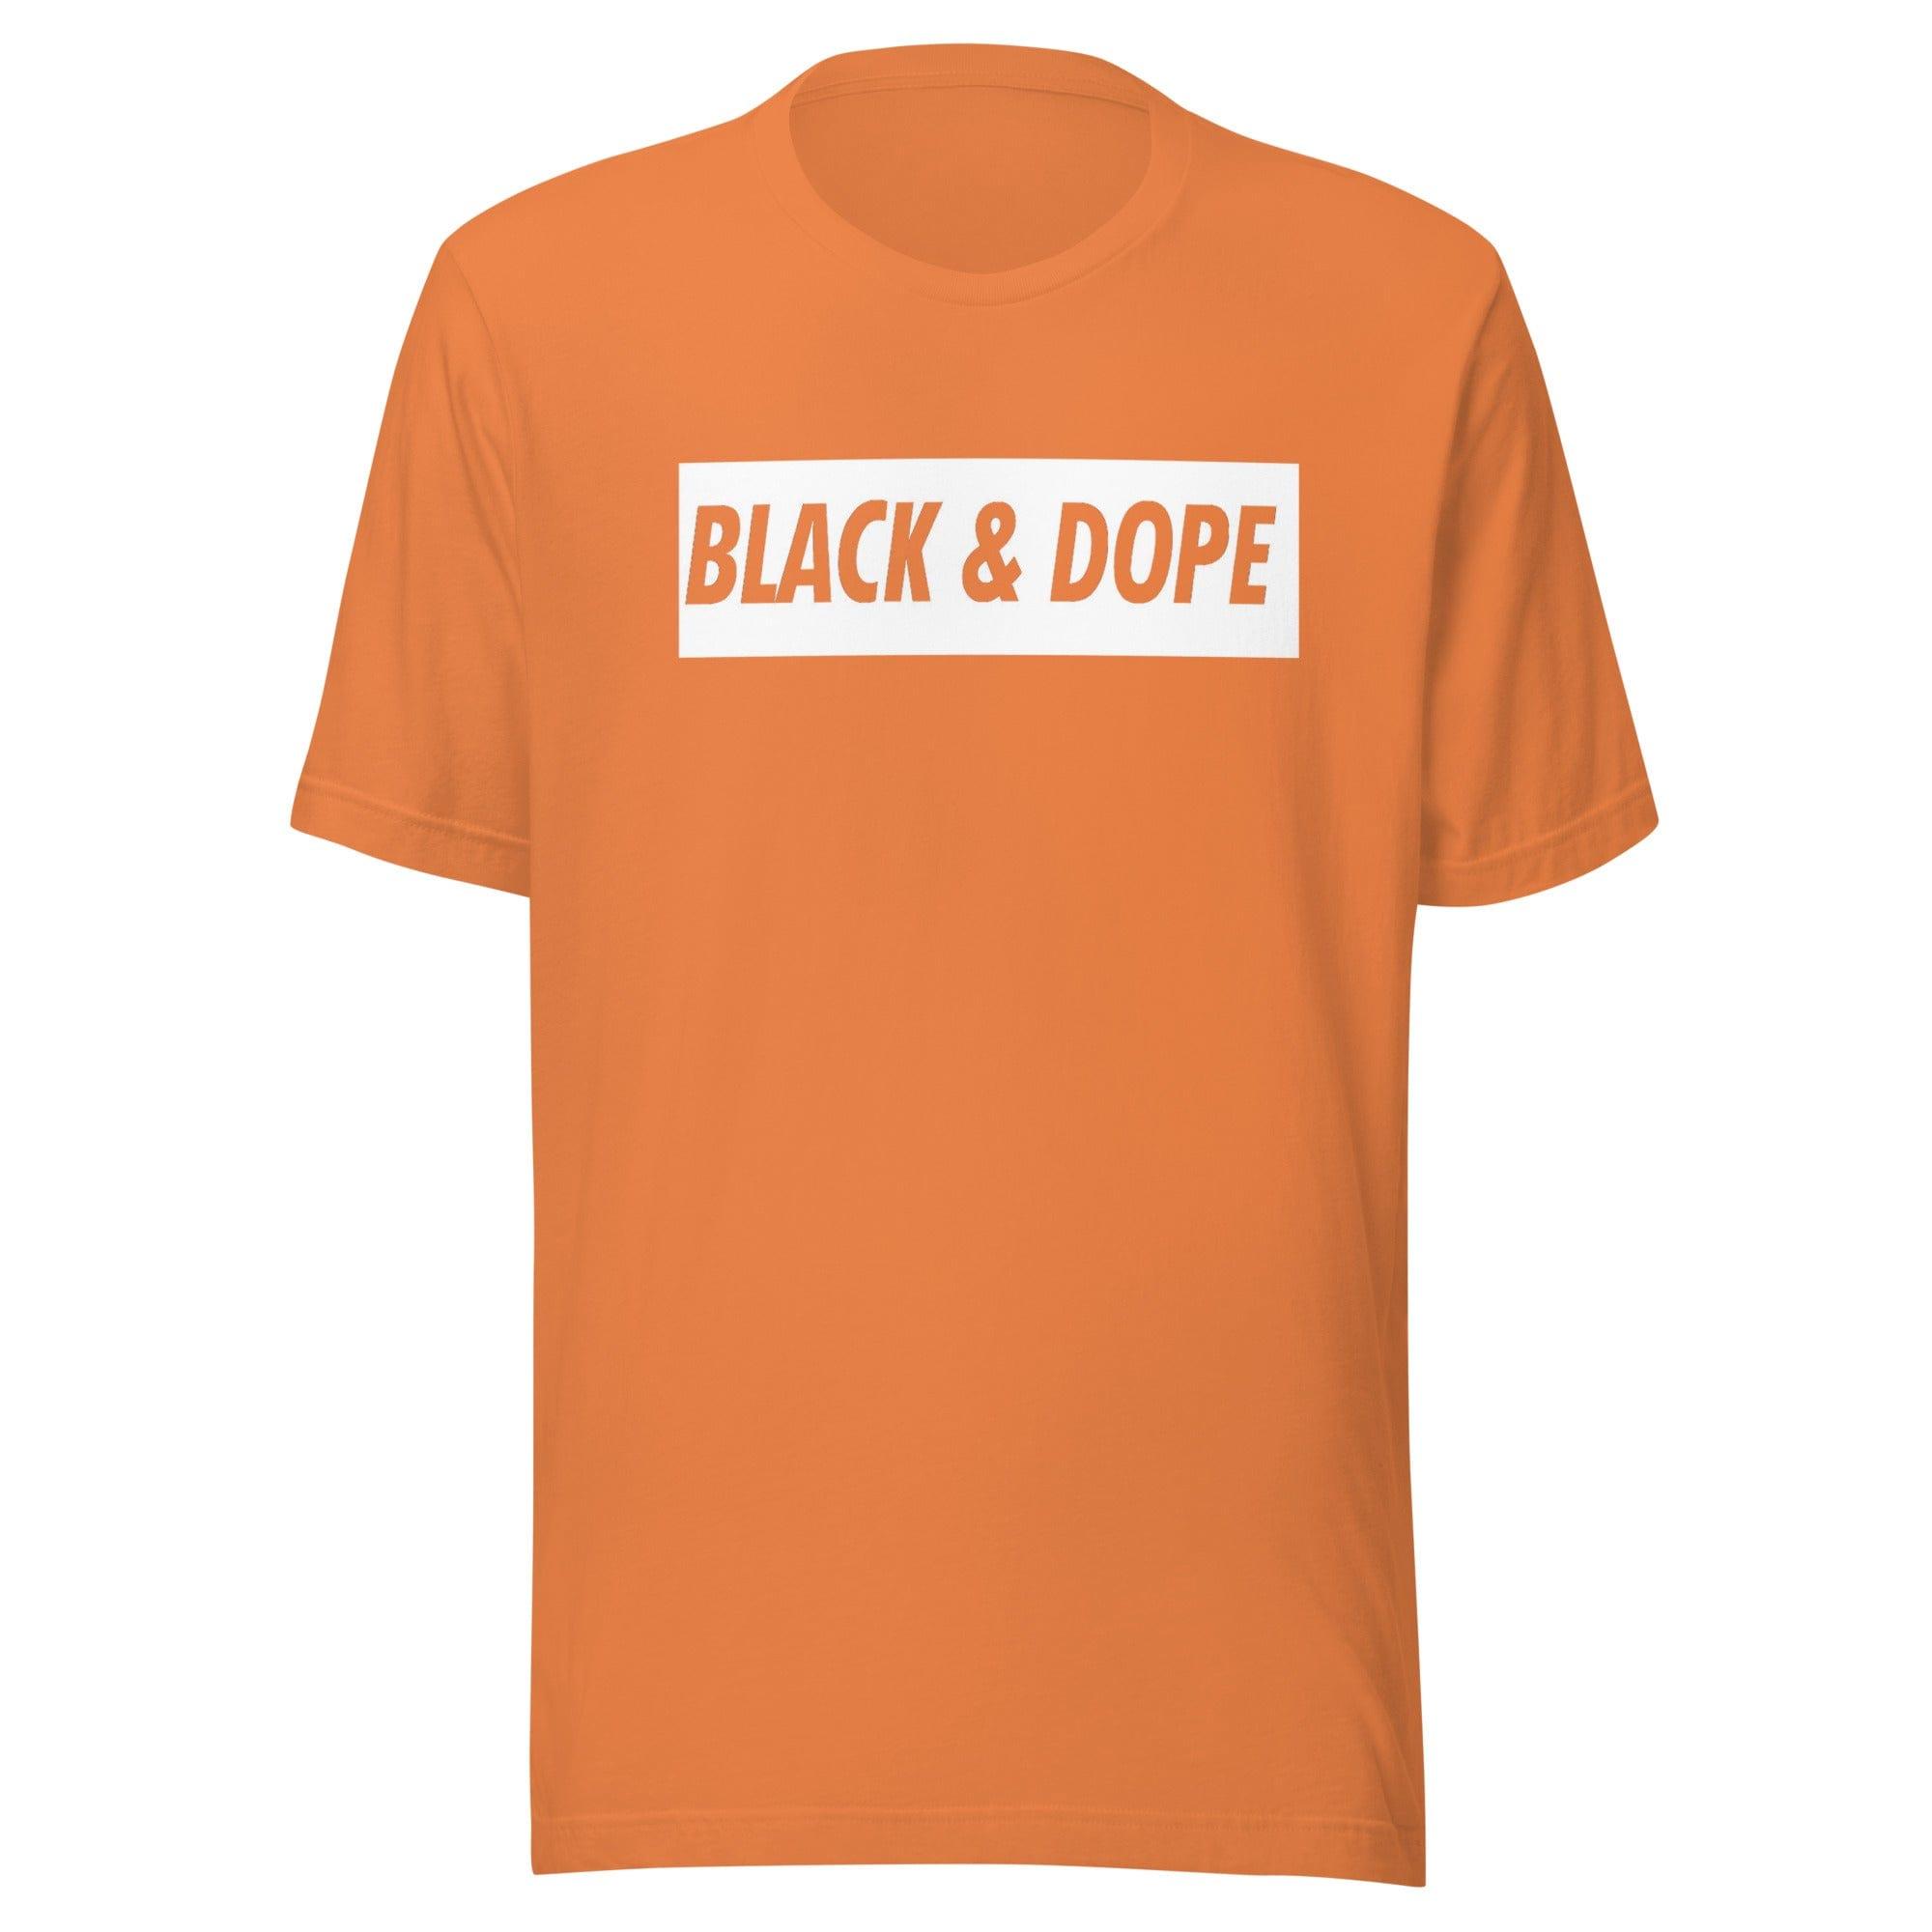 Black Pride T-shirt Black and Dope Short Sleeve Unisex Top - TopKoalaTee